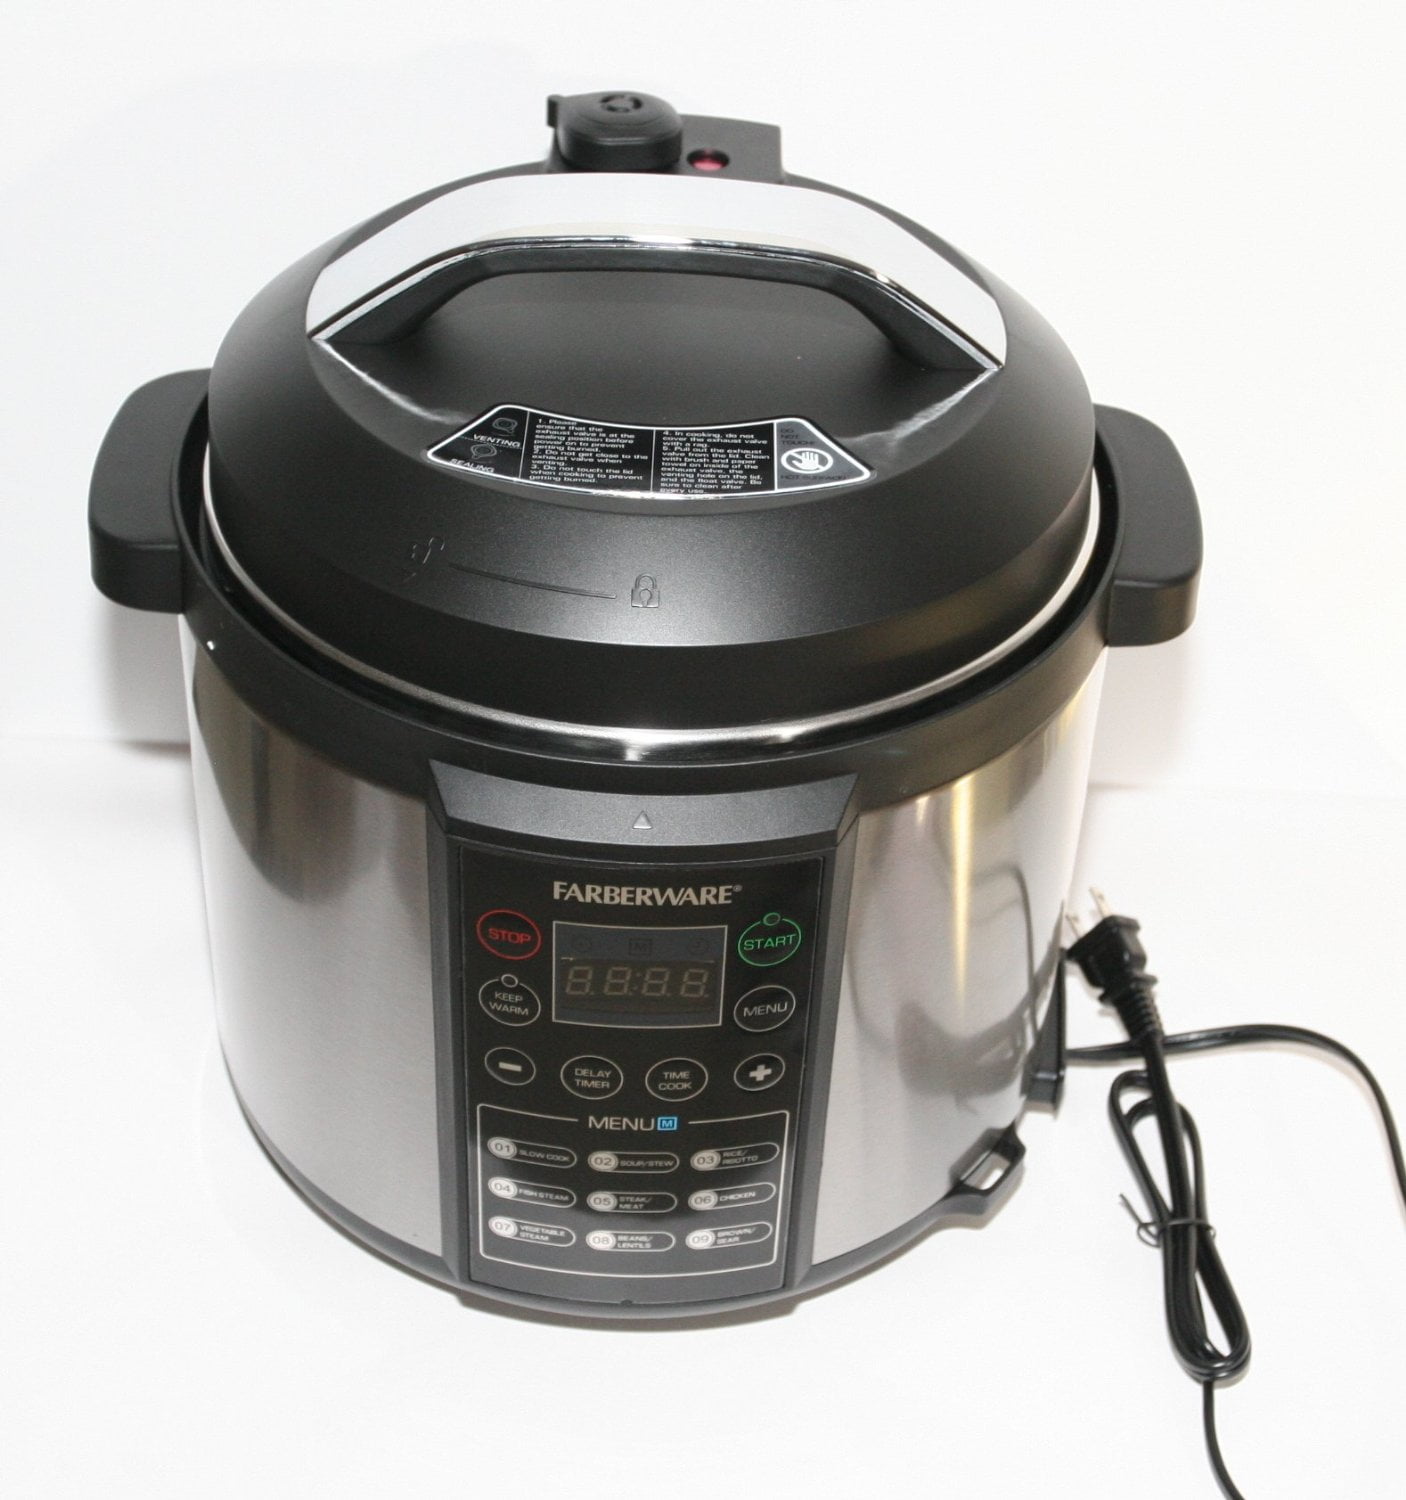 Farberware 7 in one Electric Pressure Cooker Review/Tutorial 